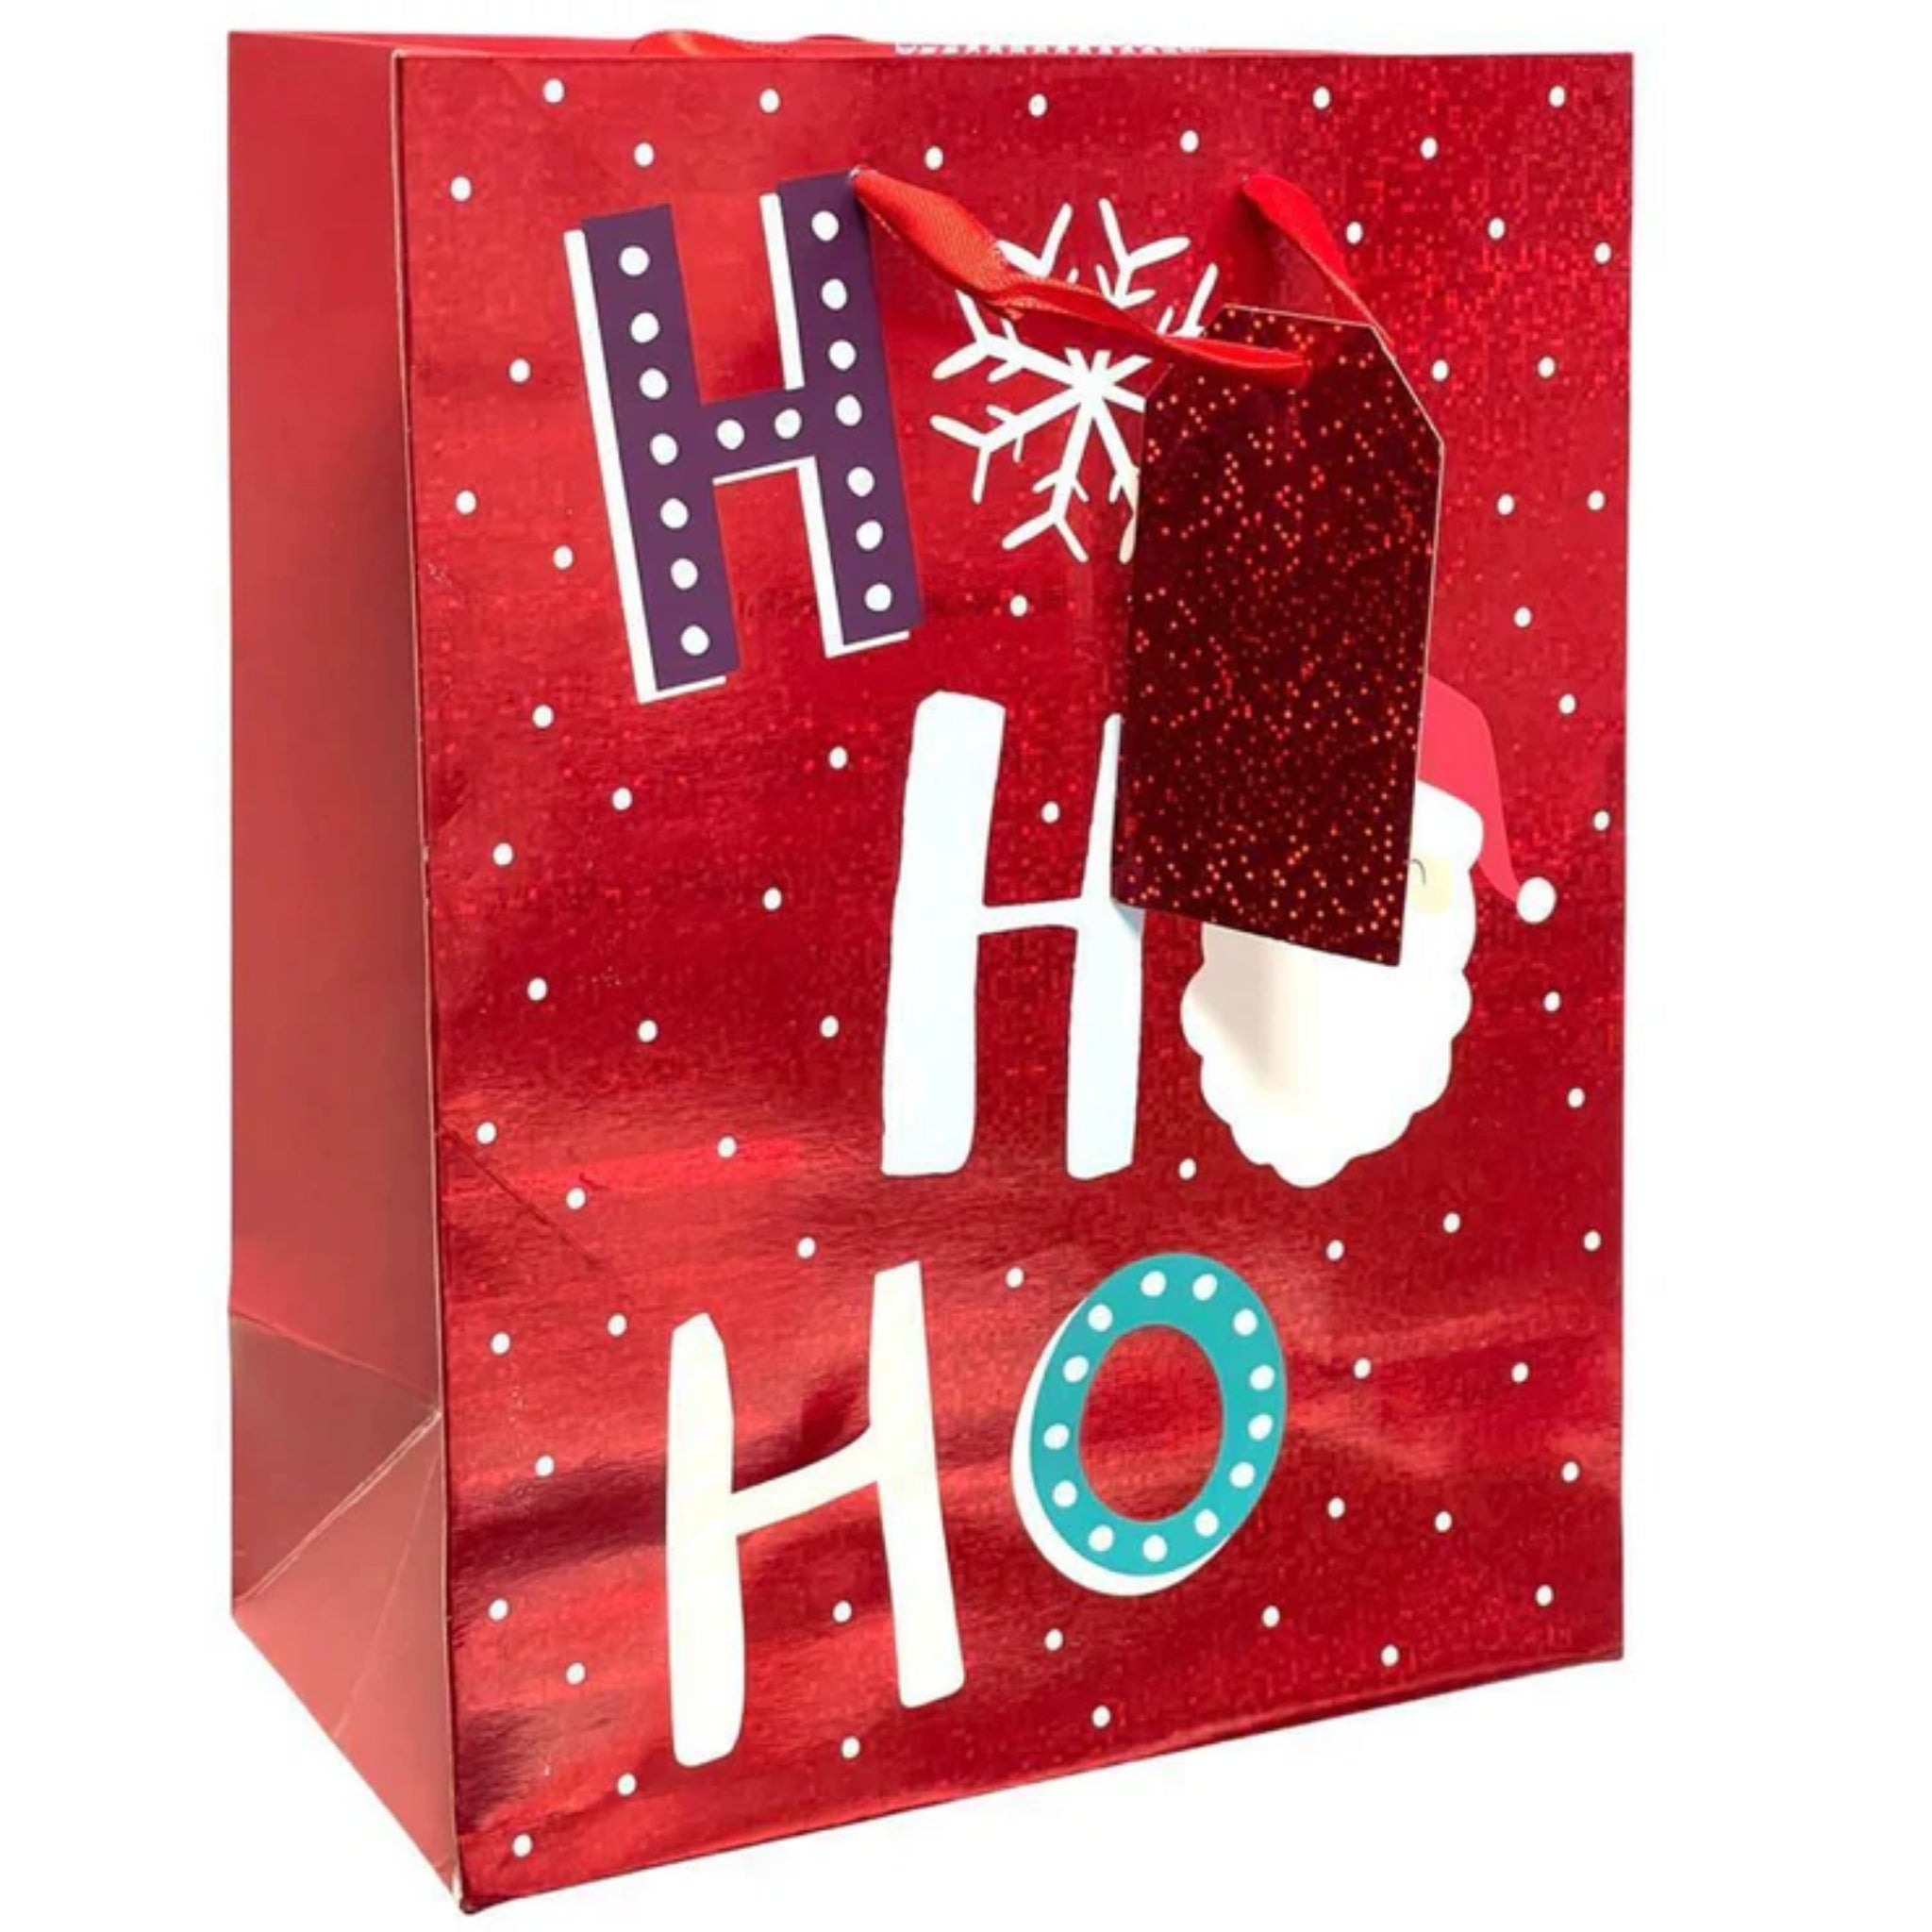 Custom Merry Christmas Full Color Gift Bag Tags - GB Design House